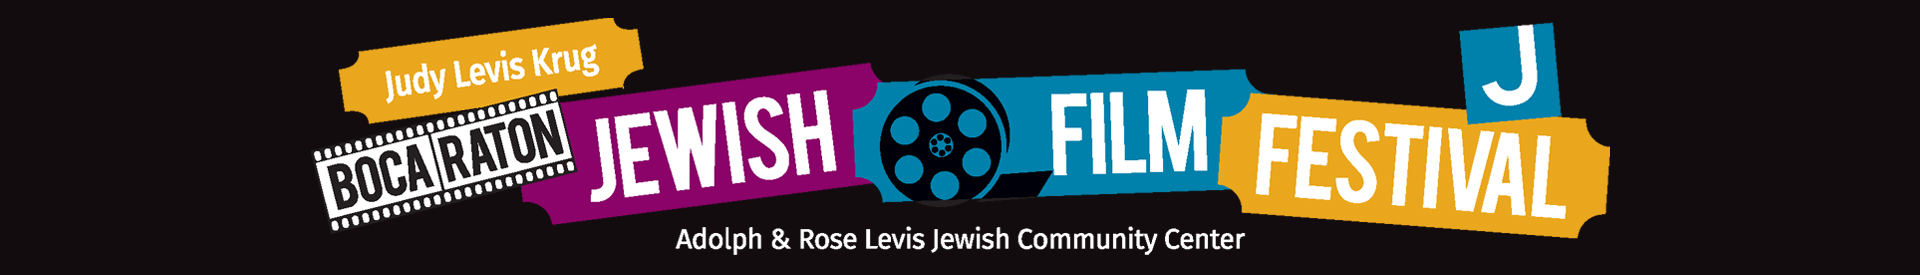 Judy Levis Krug Boca Raton Jewish Film Festival